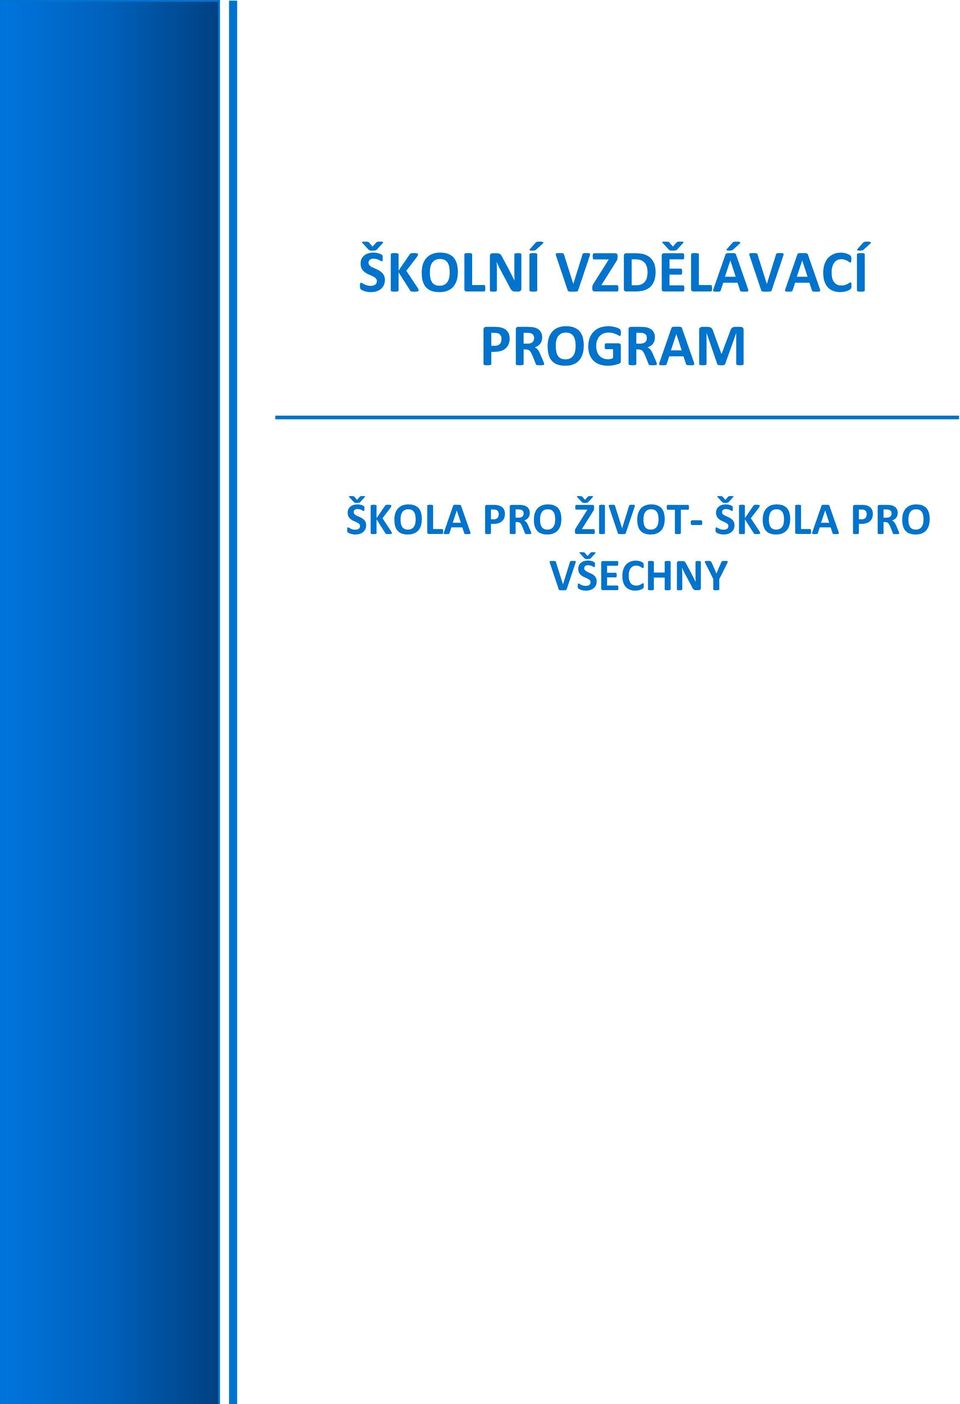 PROGRAM ŠKOLA